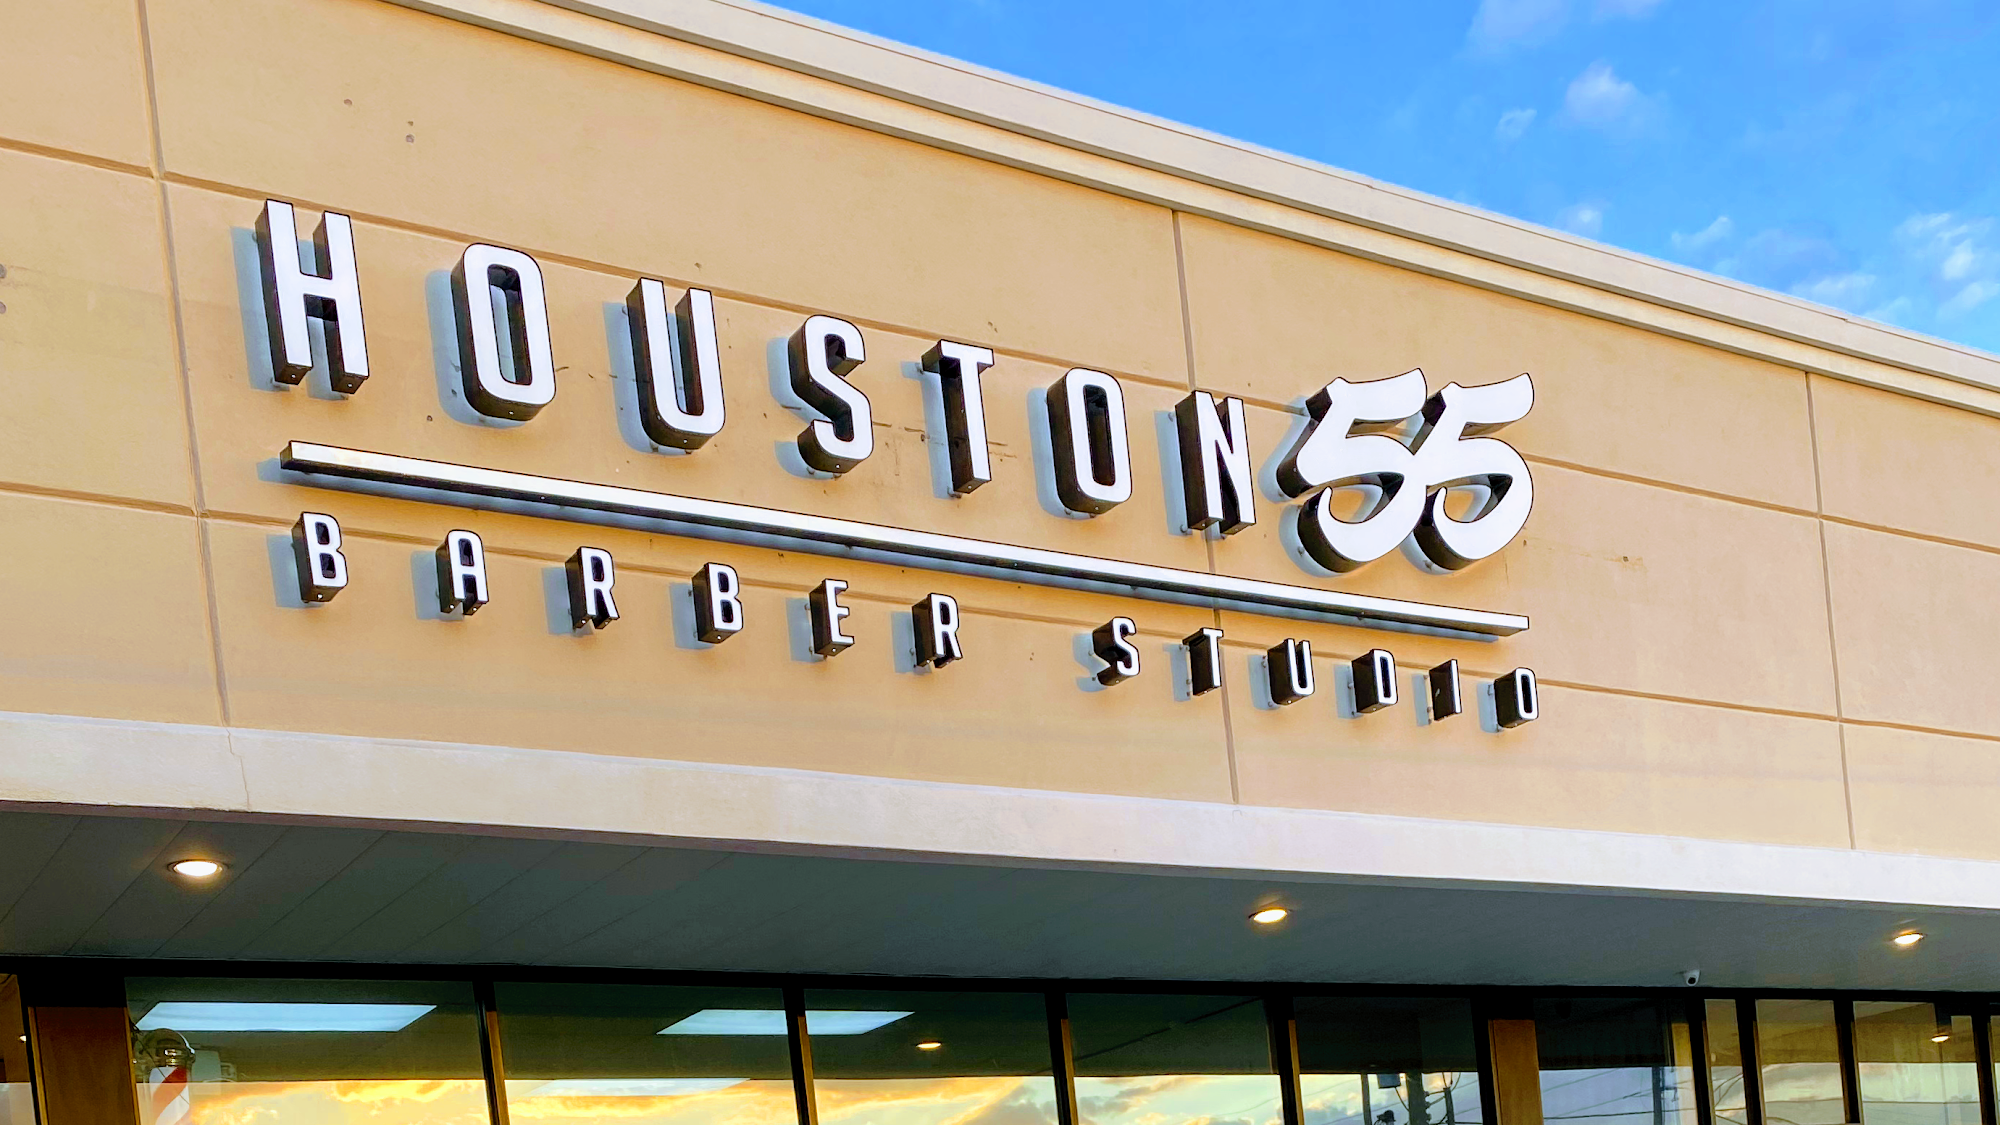 Houston55 Barber Studio